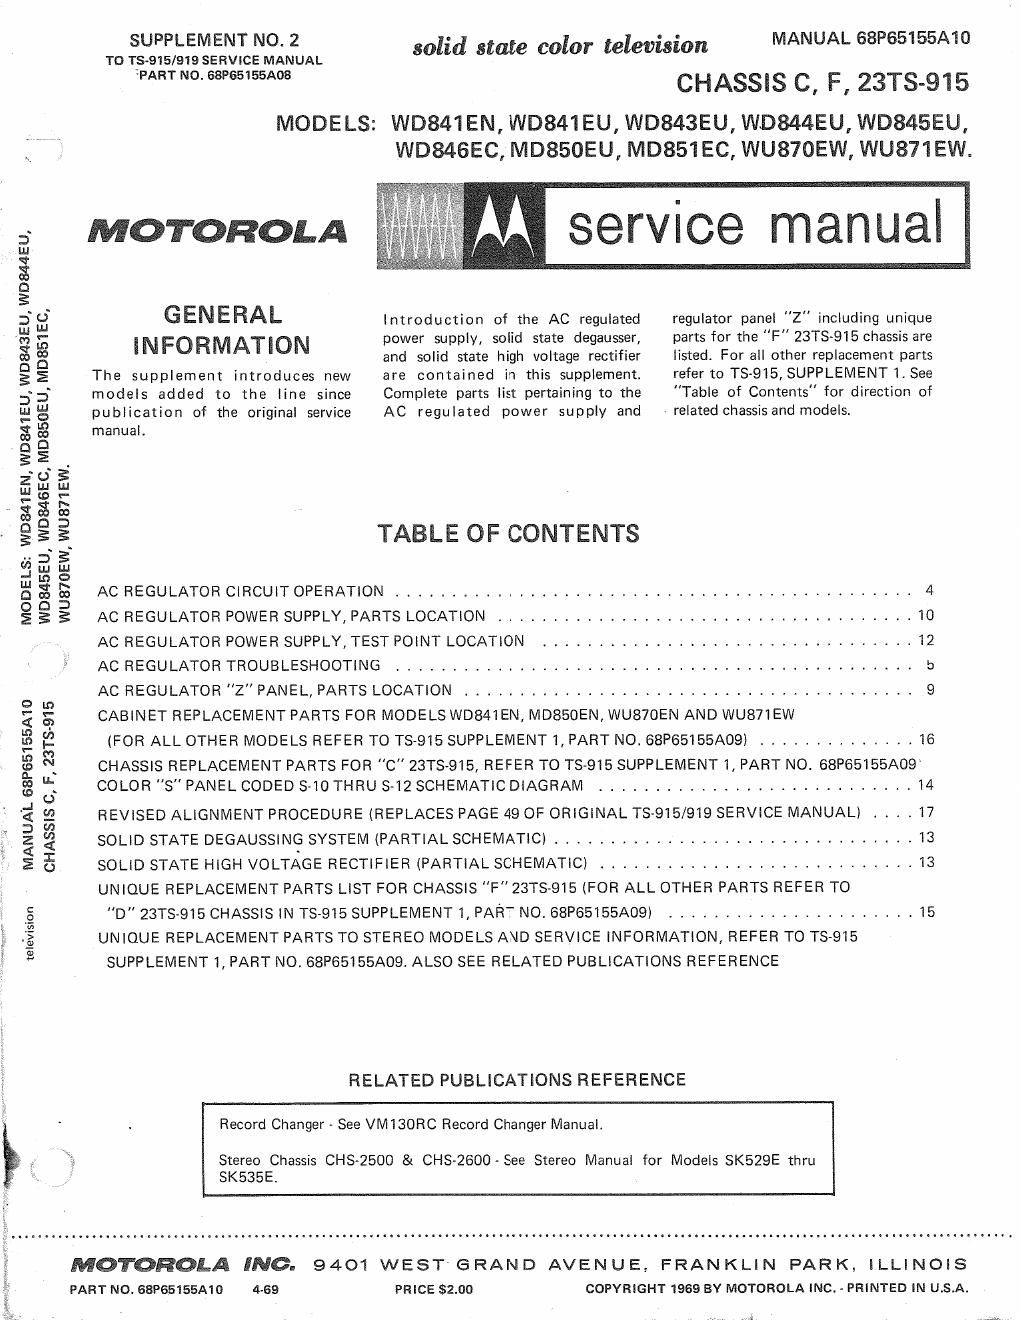 motorola wd 844 eu service manual